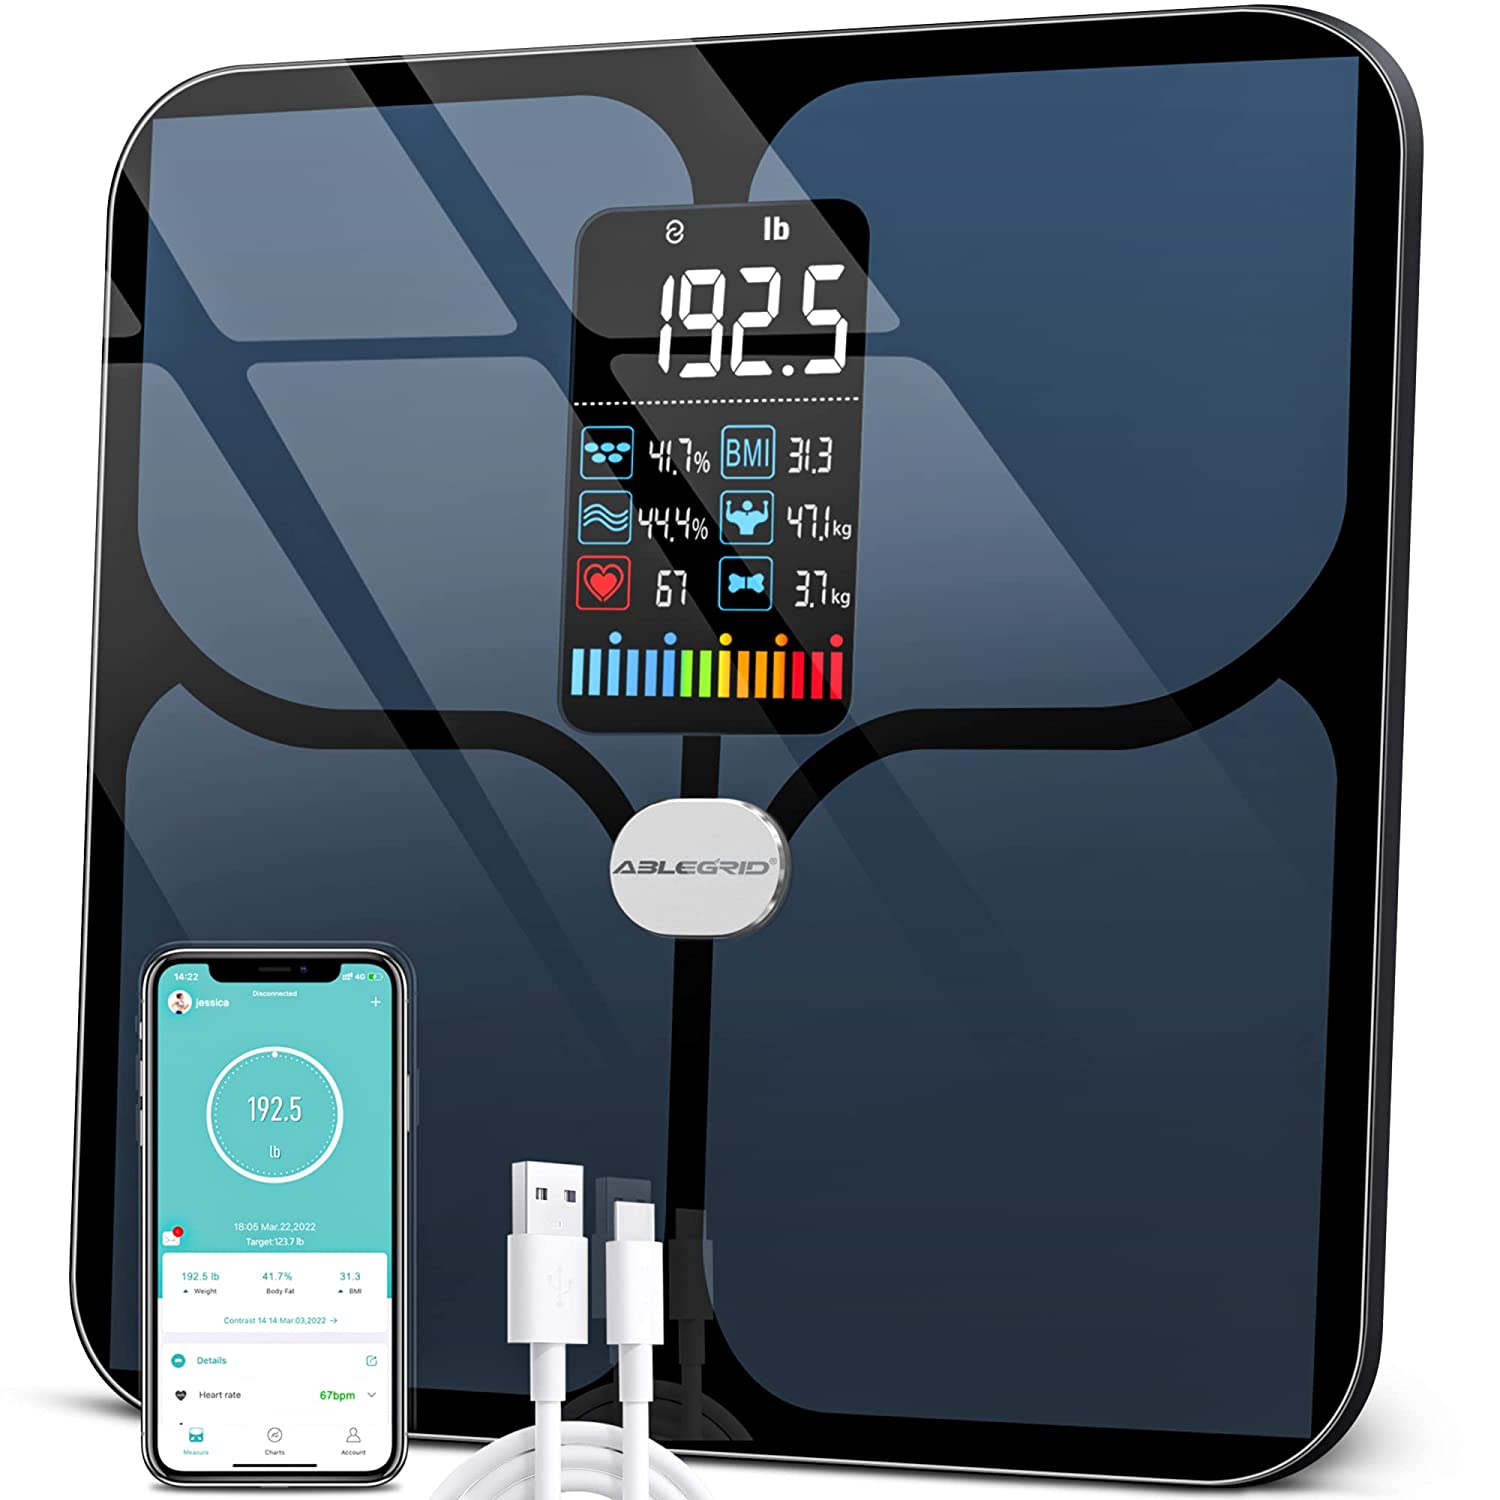 Bluetooth Smart Bathroom Scales for Body Weight Digital Scale Body